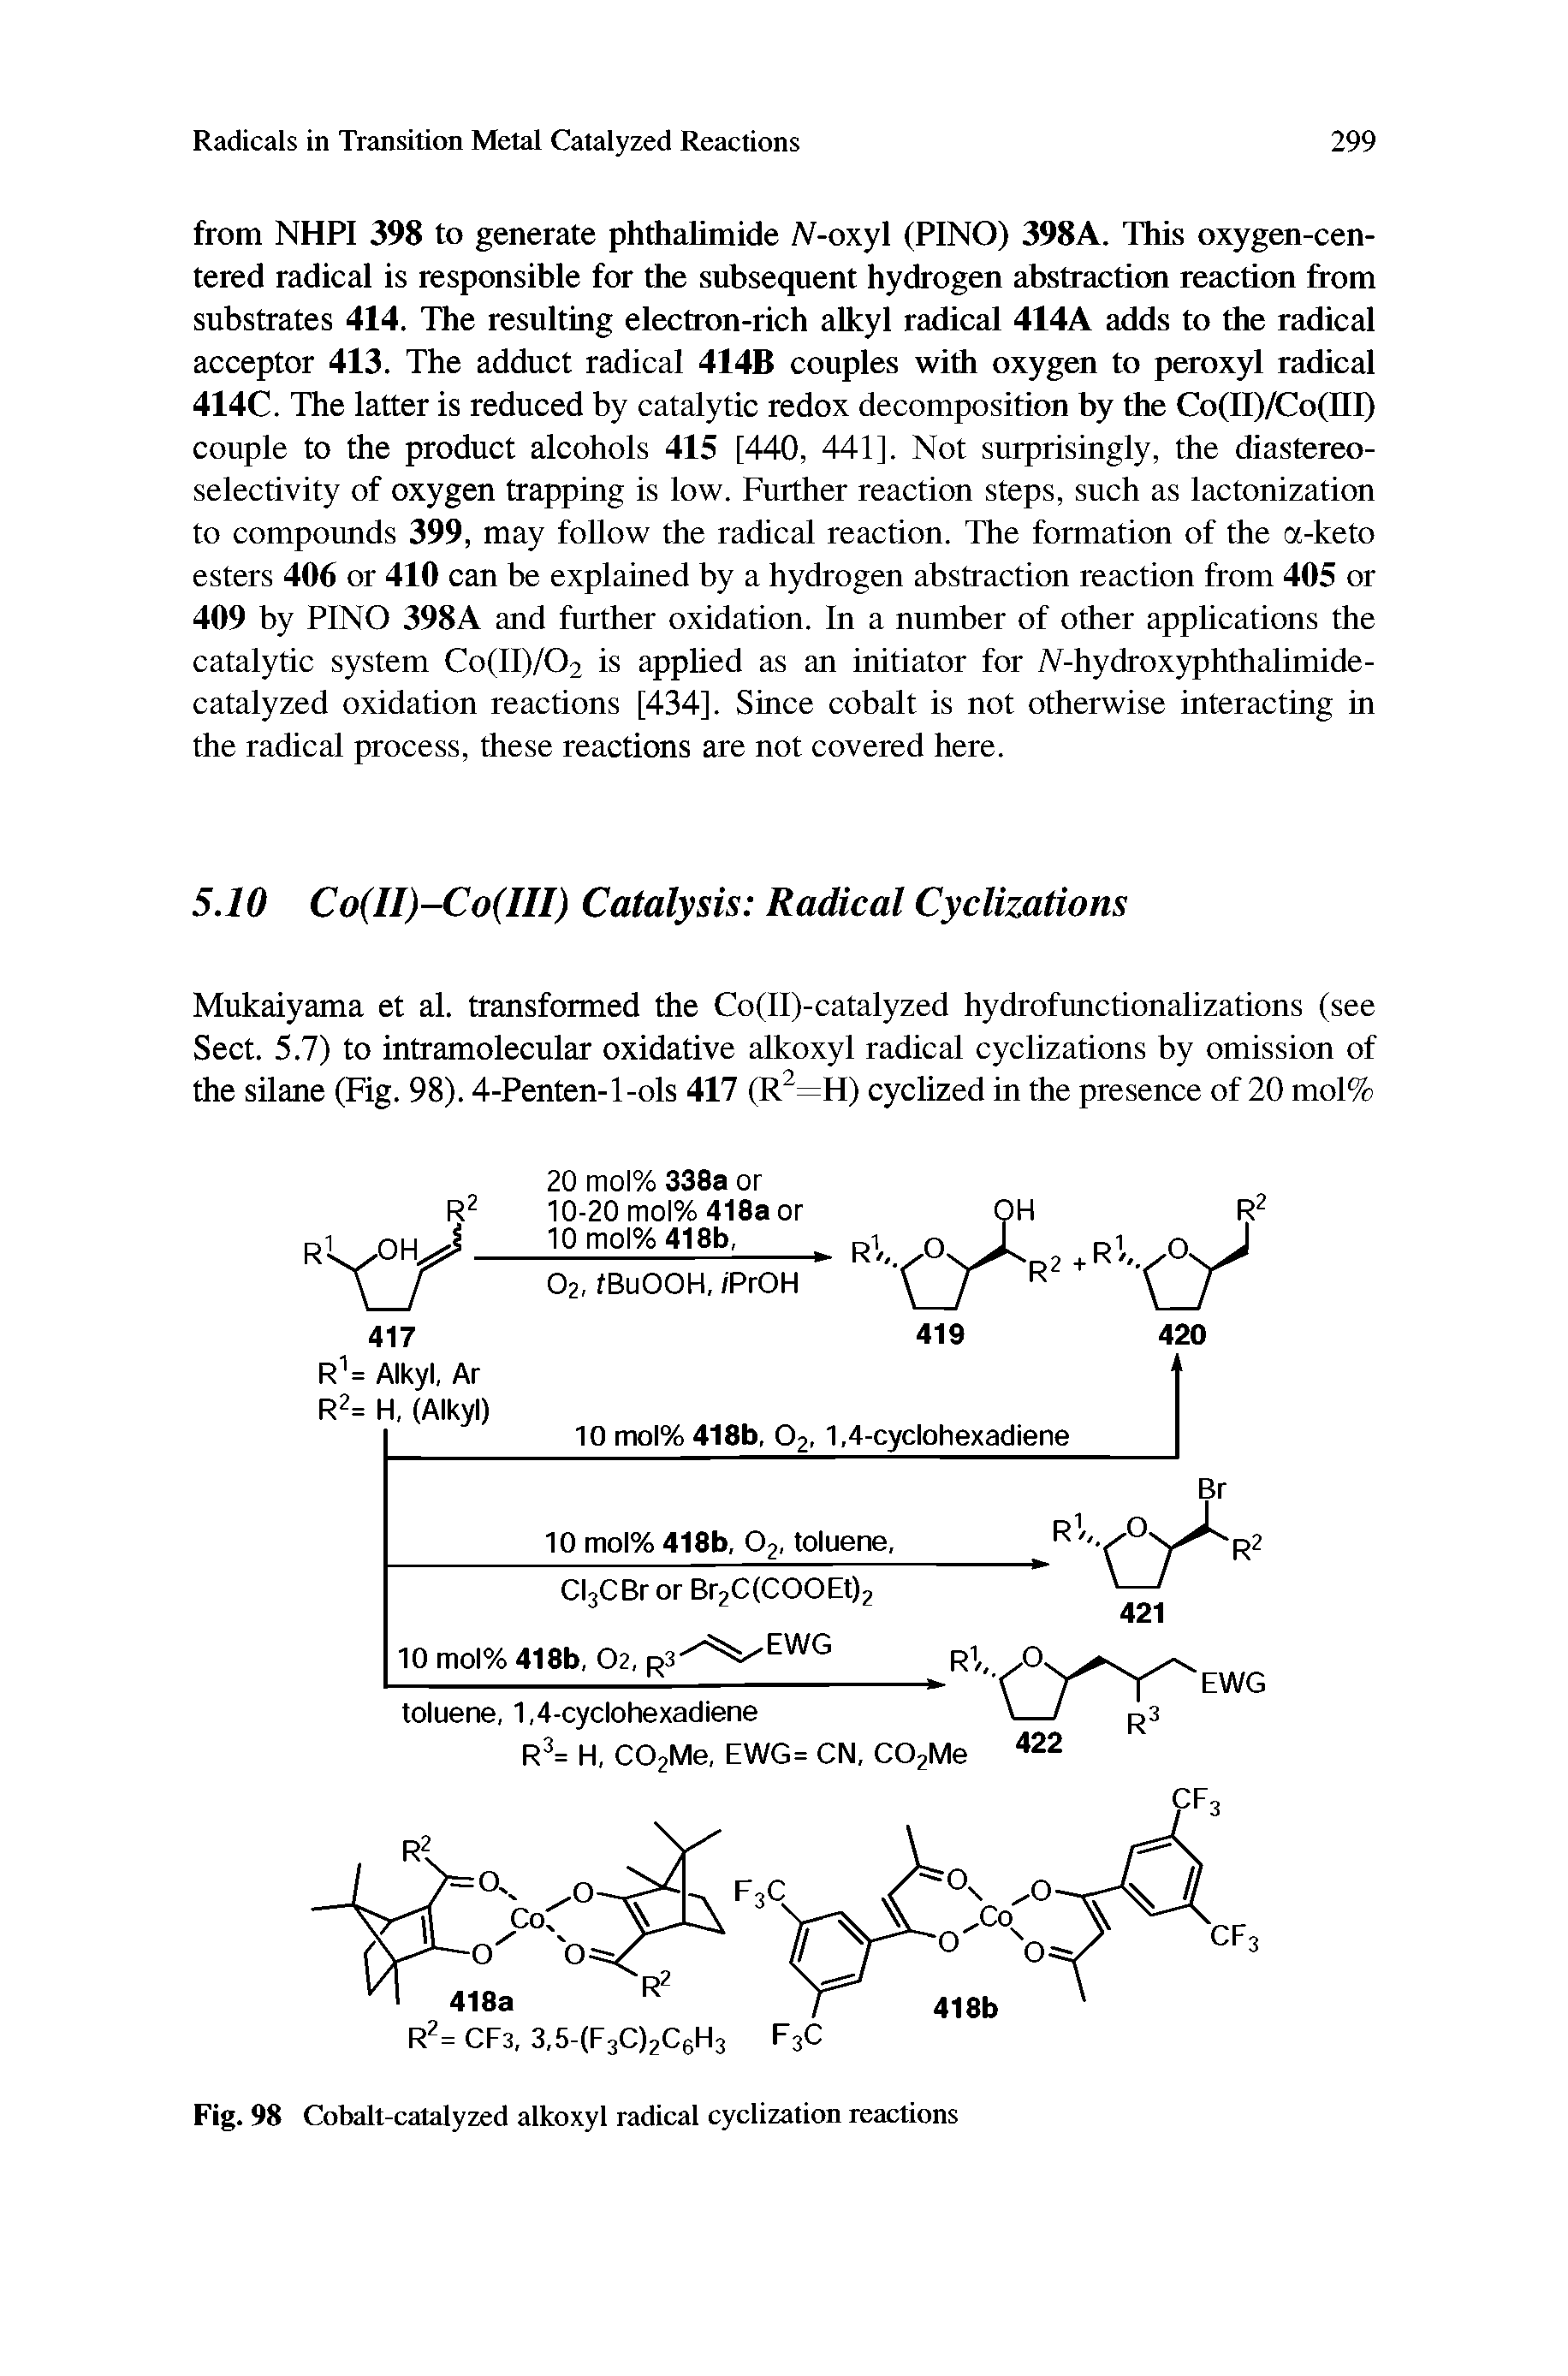 Fig. 98 Cobalt-catalyzed alkoxyl radical cyclization reactions...